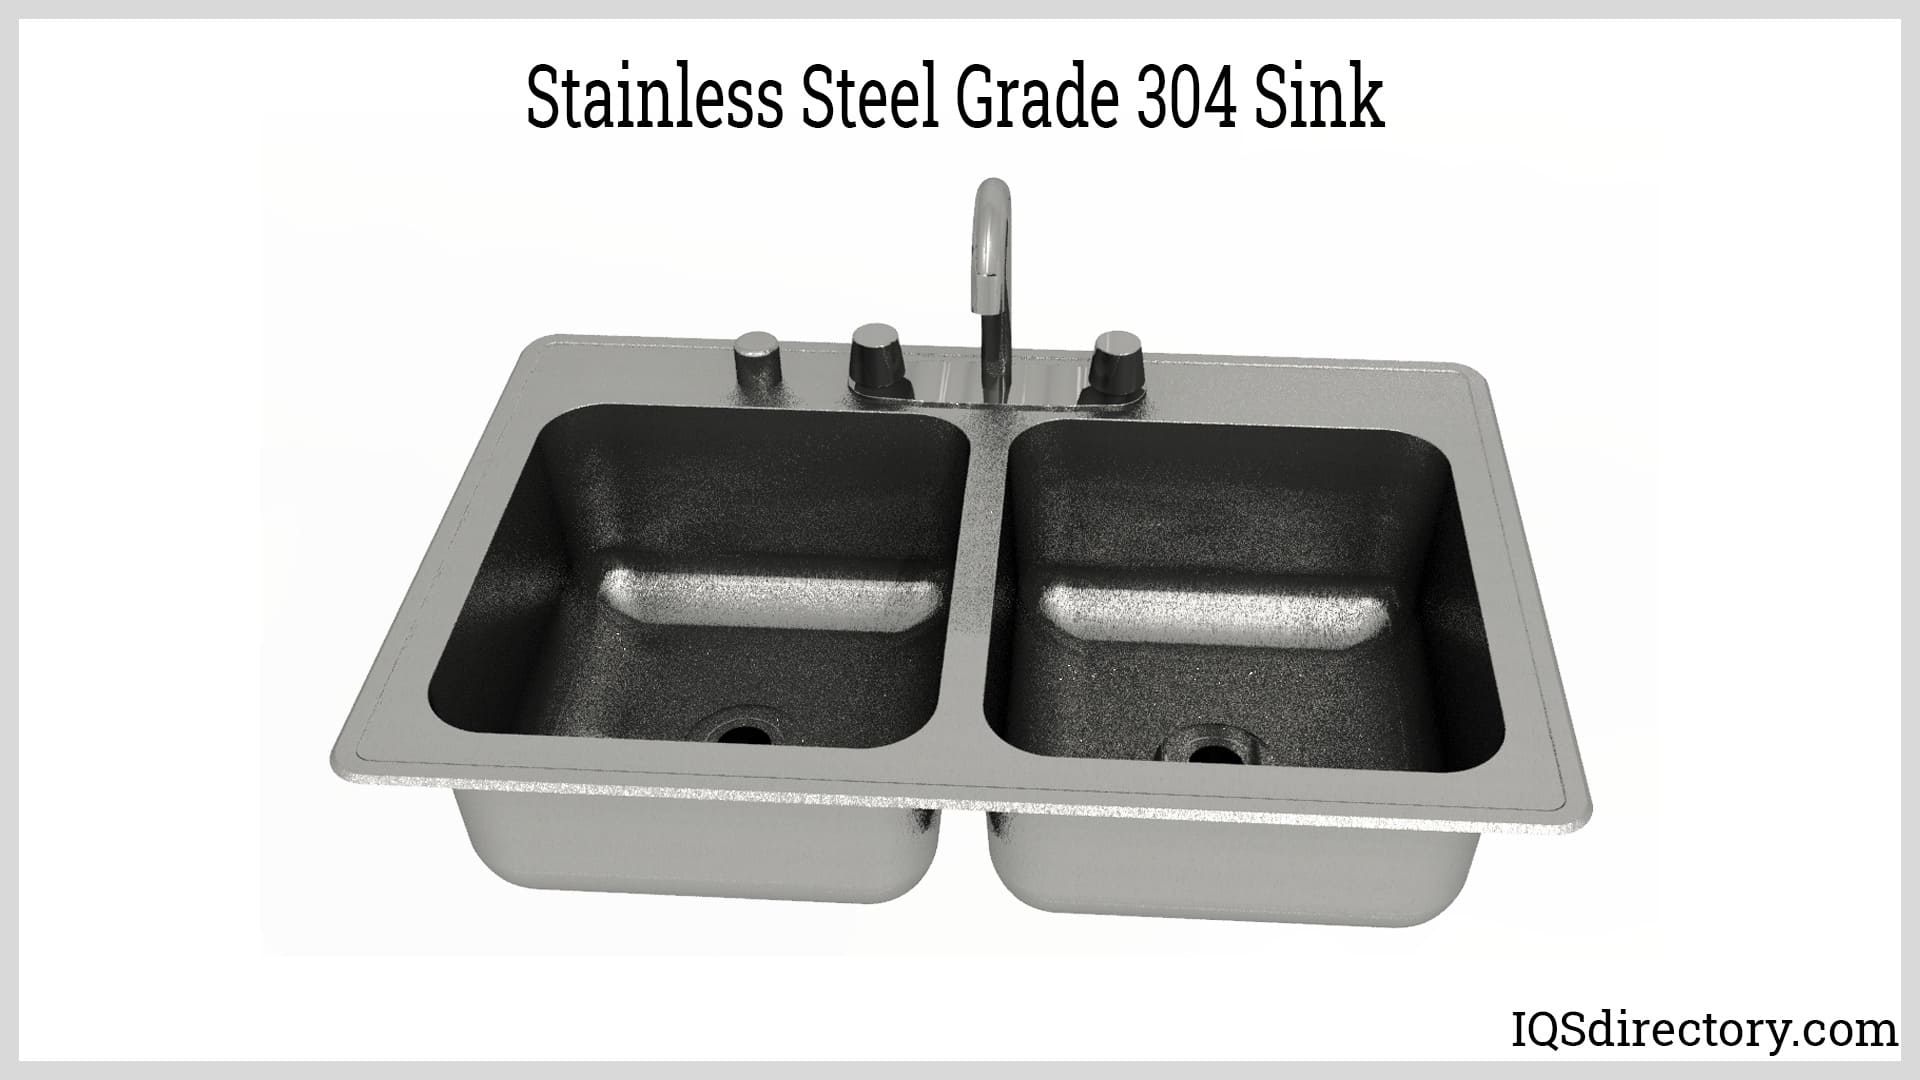 Stainless Steel Grade 304 Sink